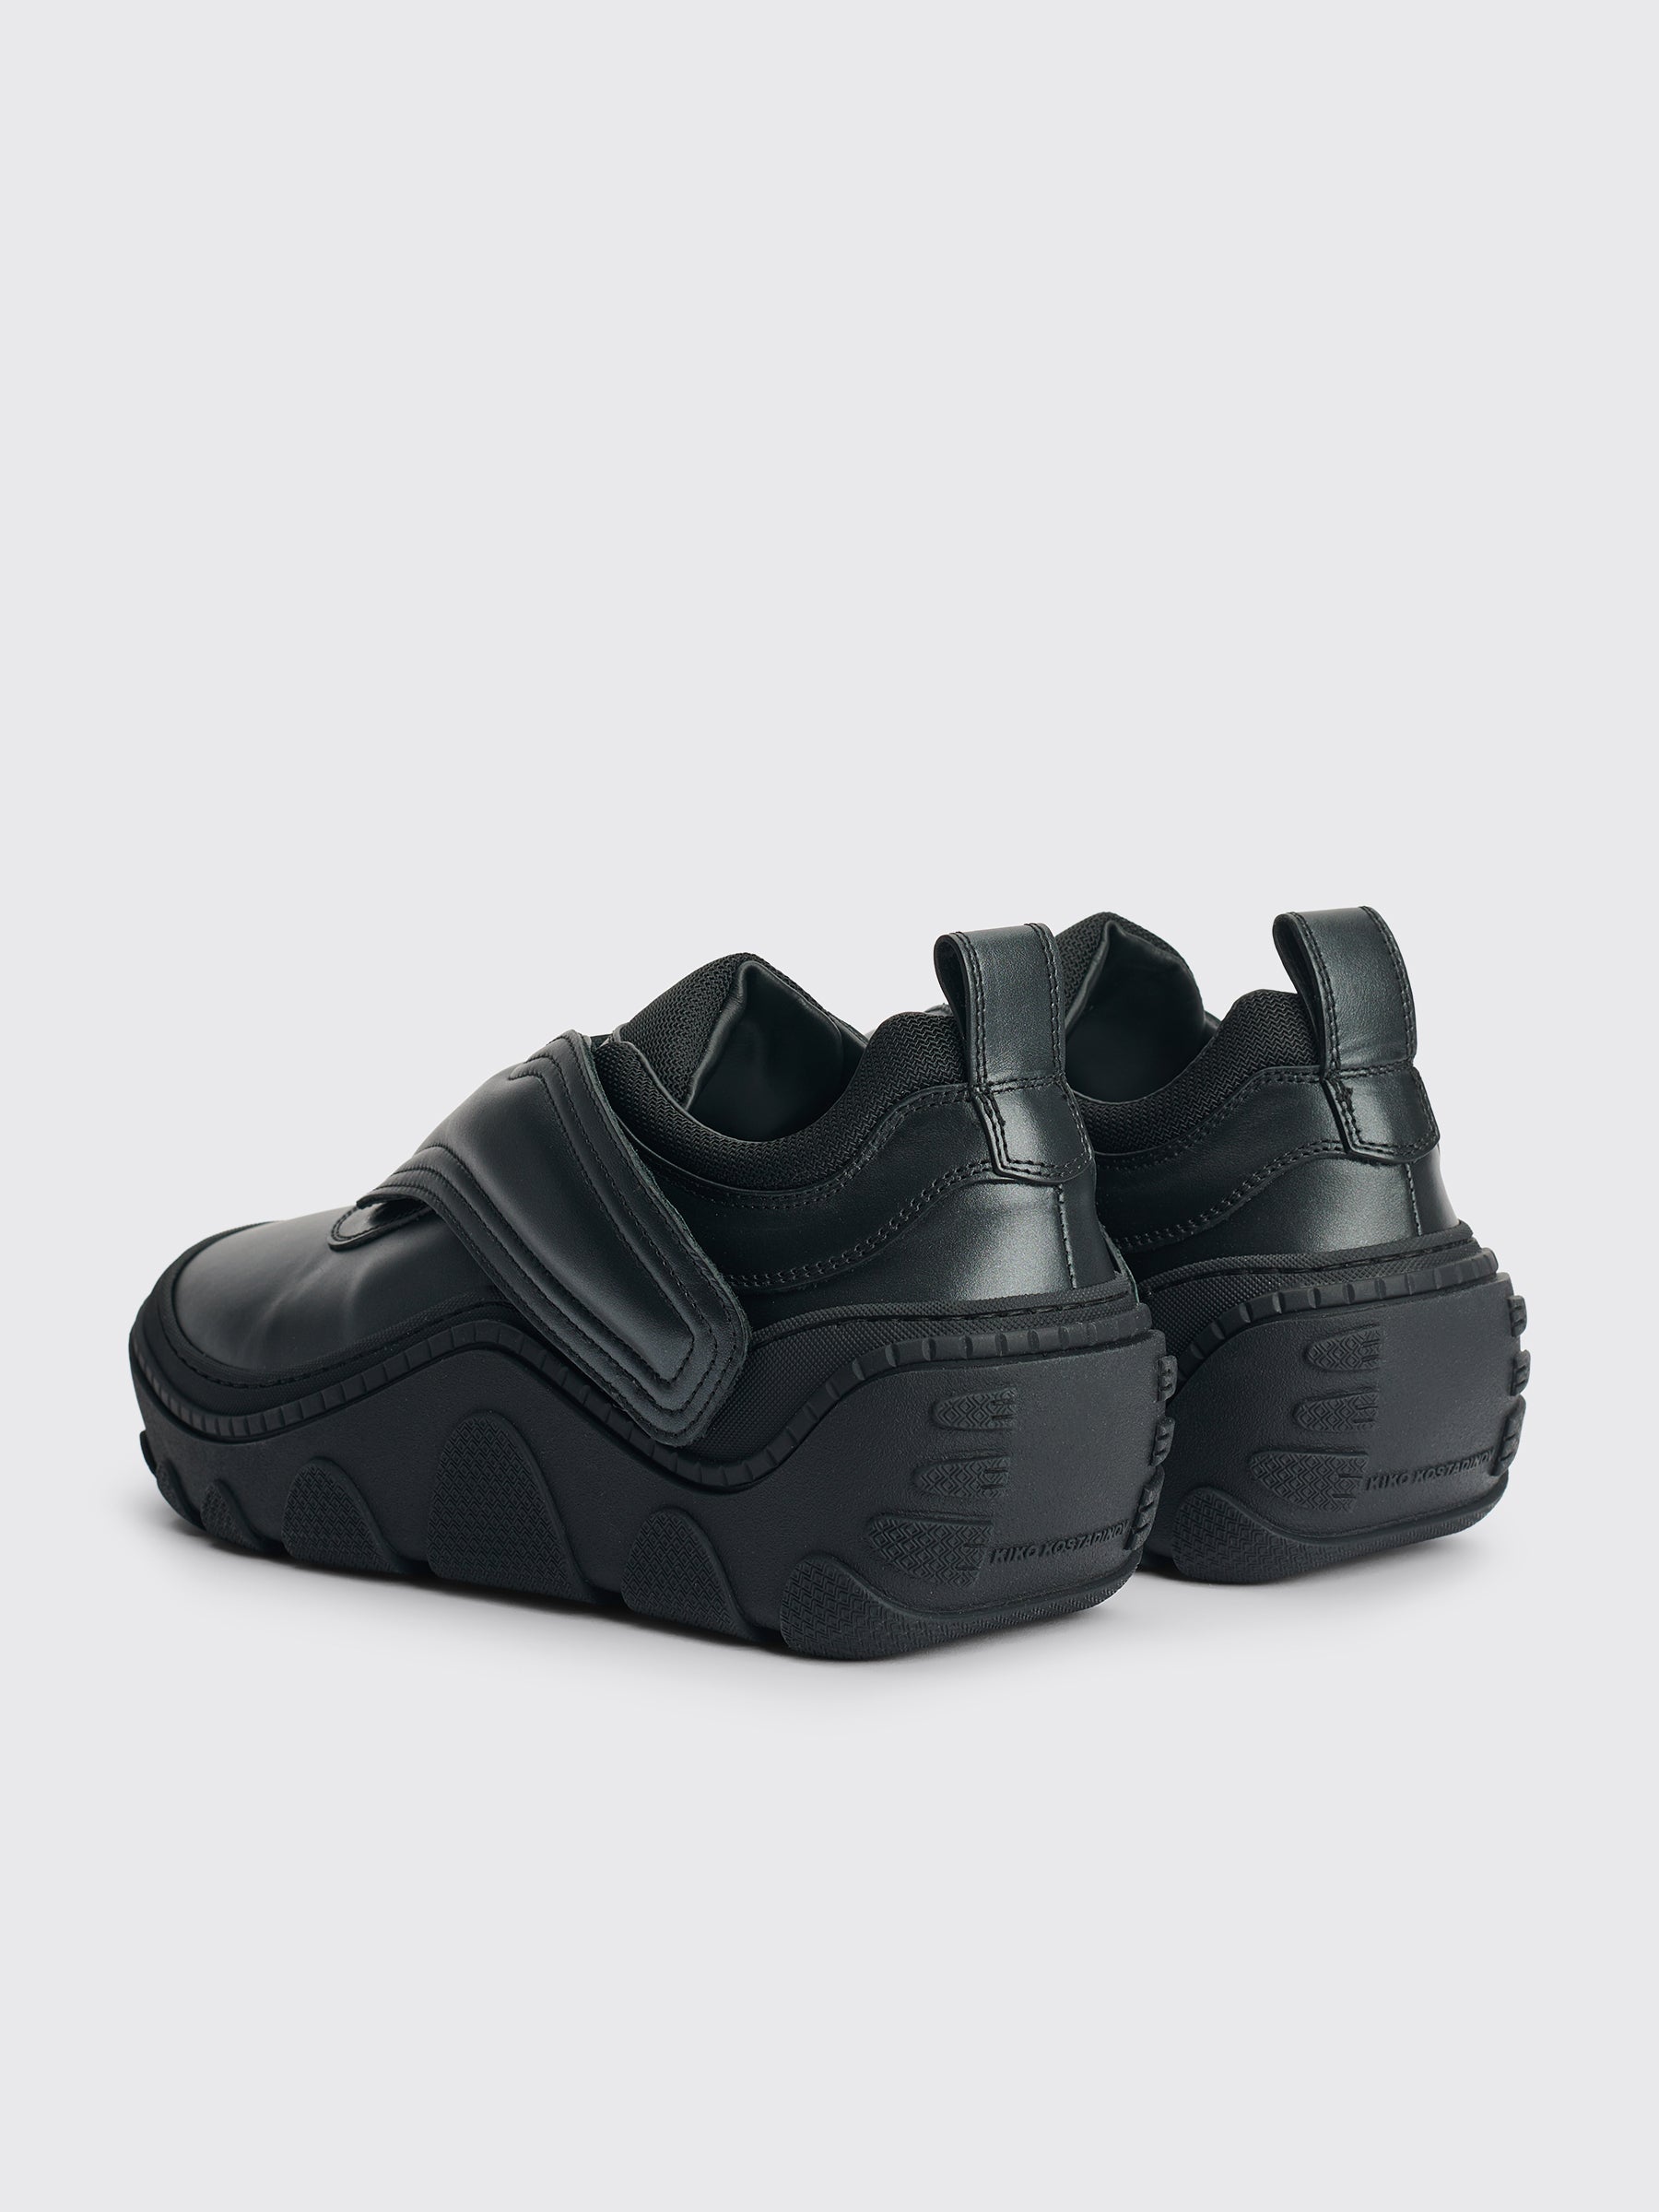 Kiko Kostadinov Tonkin Strap Shoe Leather Charcoal / Jet Black